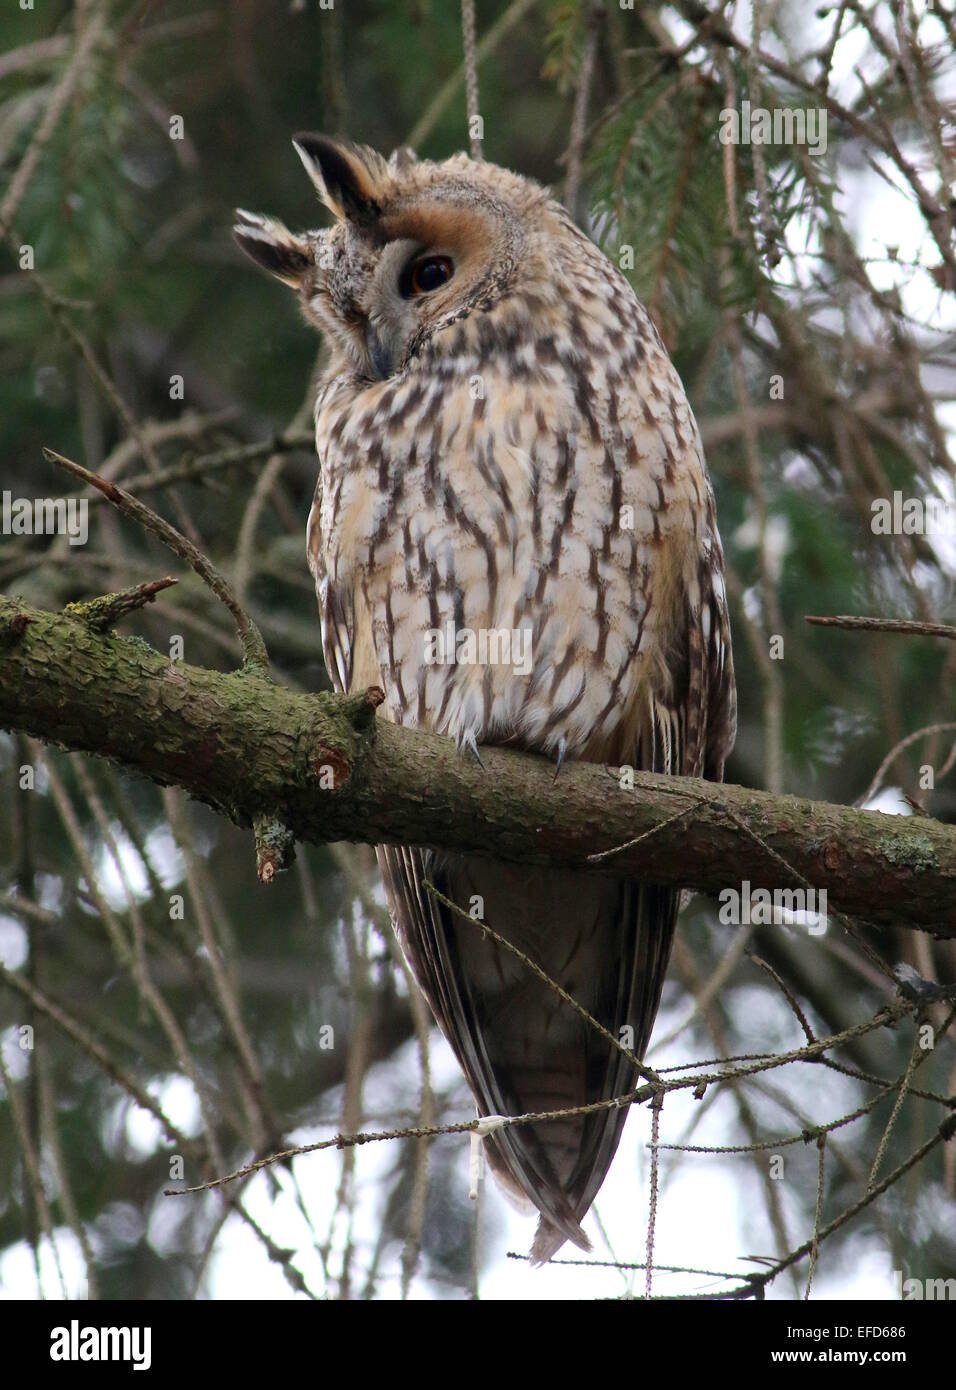 Long-eared Owl (Asio otus) in a pine tree during daytime, alert and awake Stock Photo